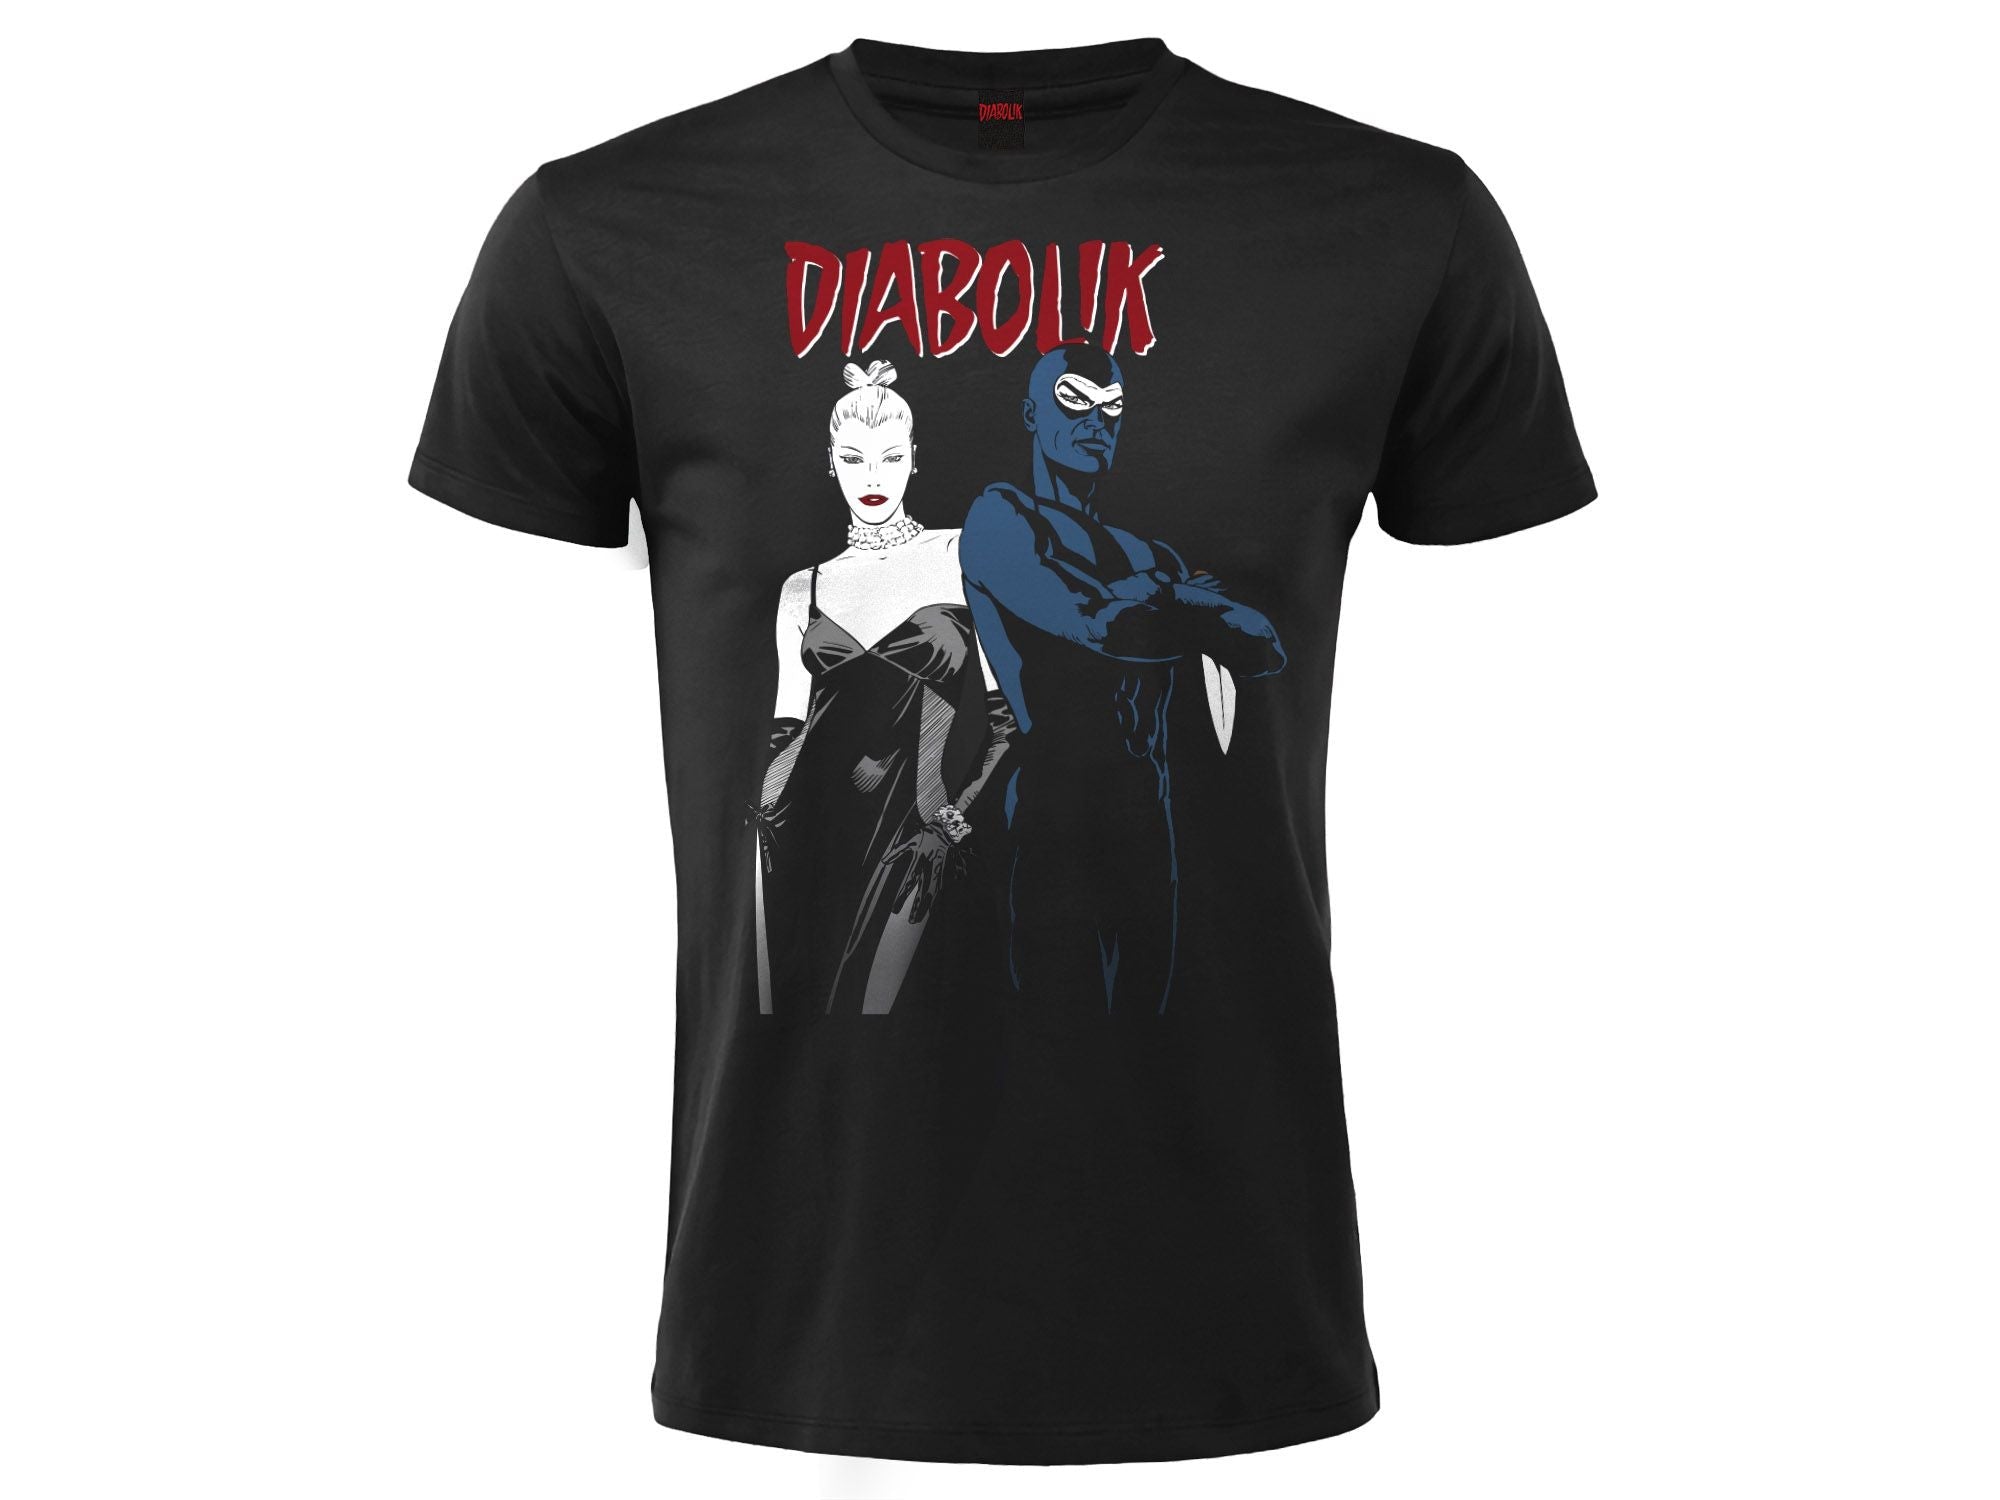 T-Shirt Diabolik ed Eva - Solo € 19.99! Acquista ora su ALLAN&DAYLE 